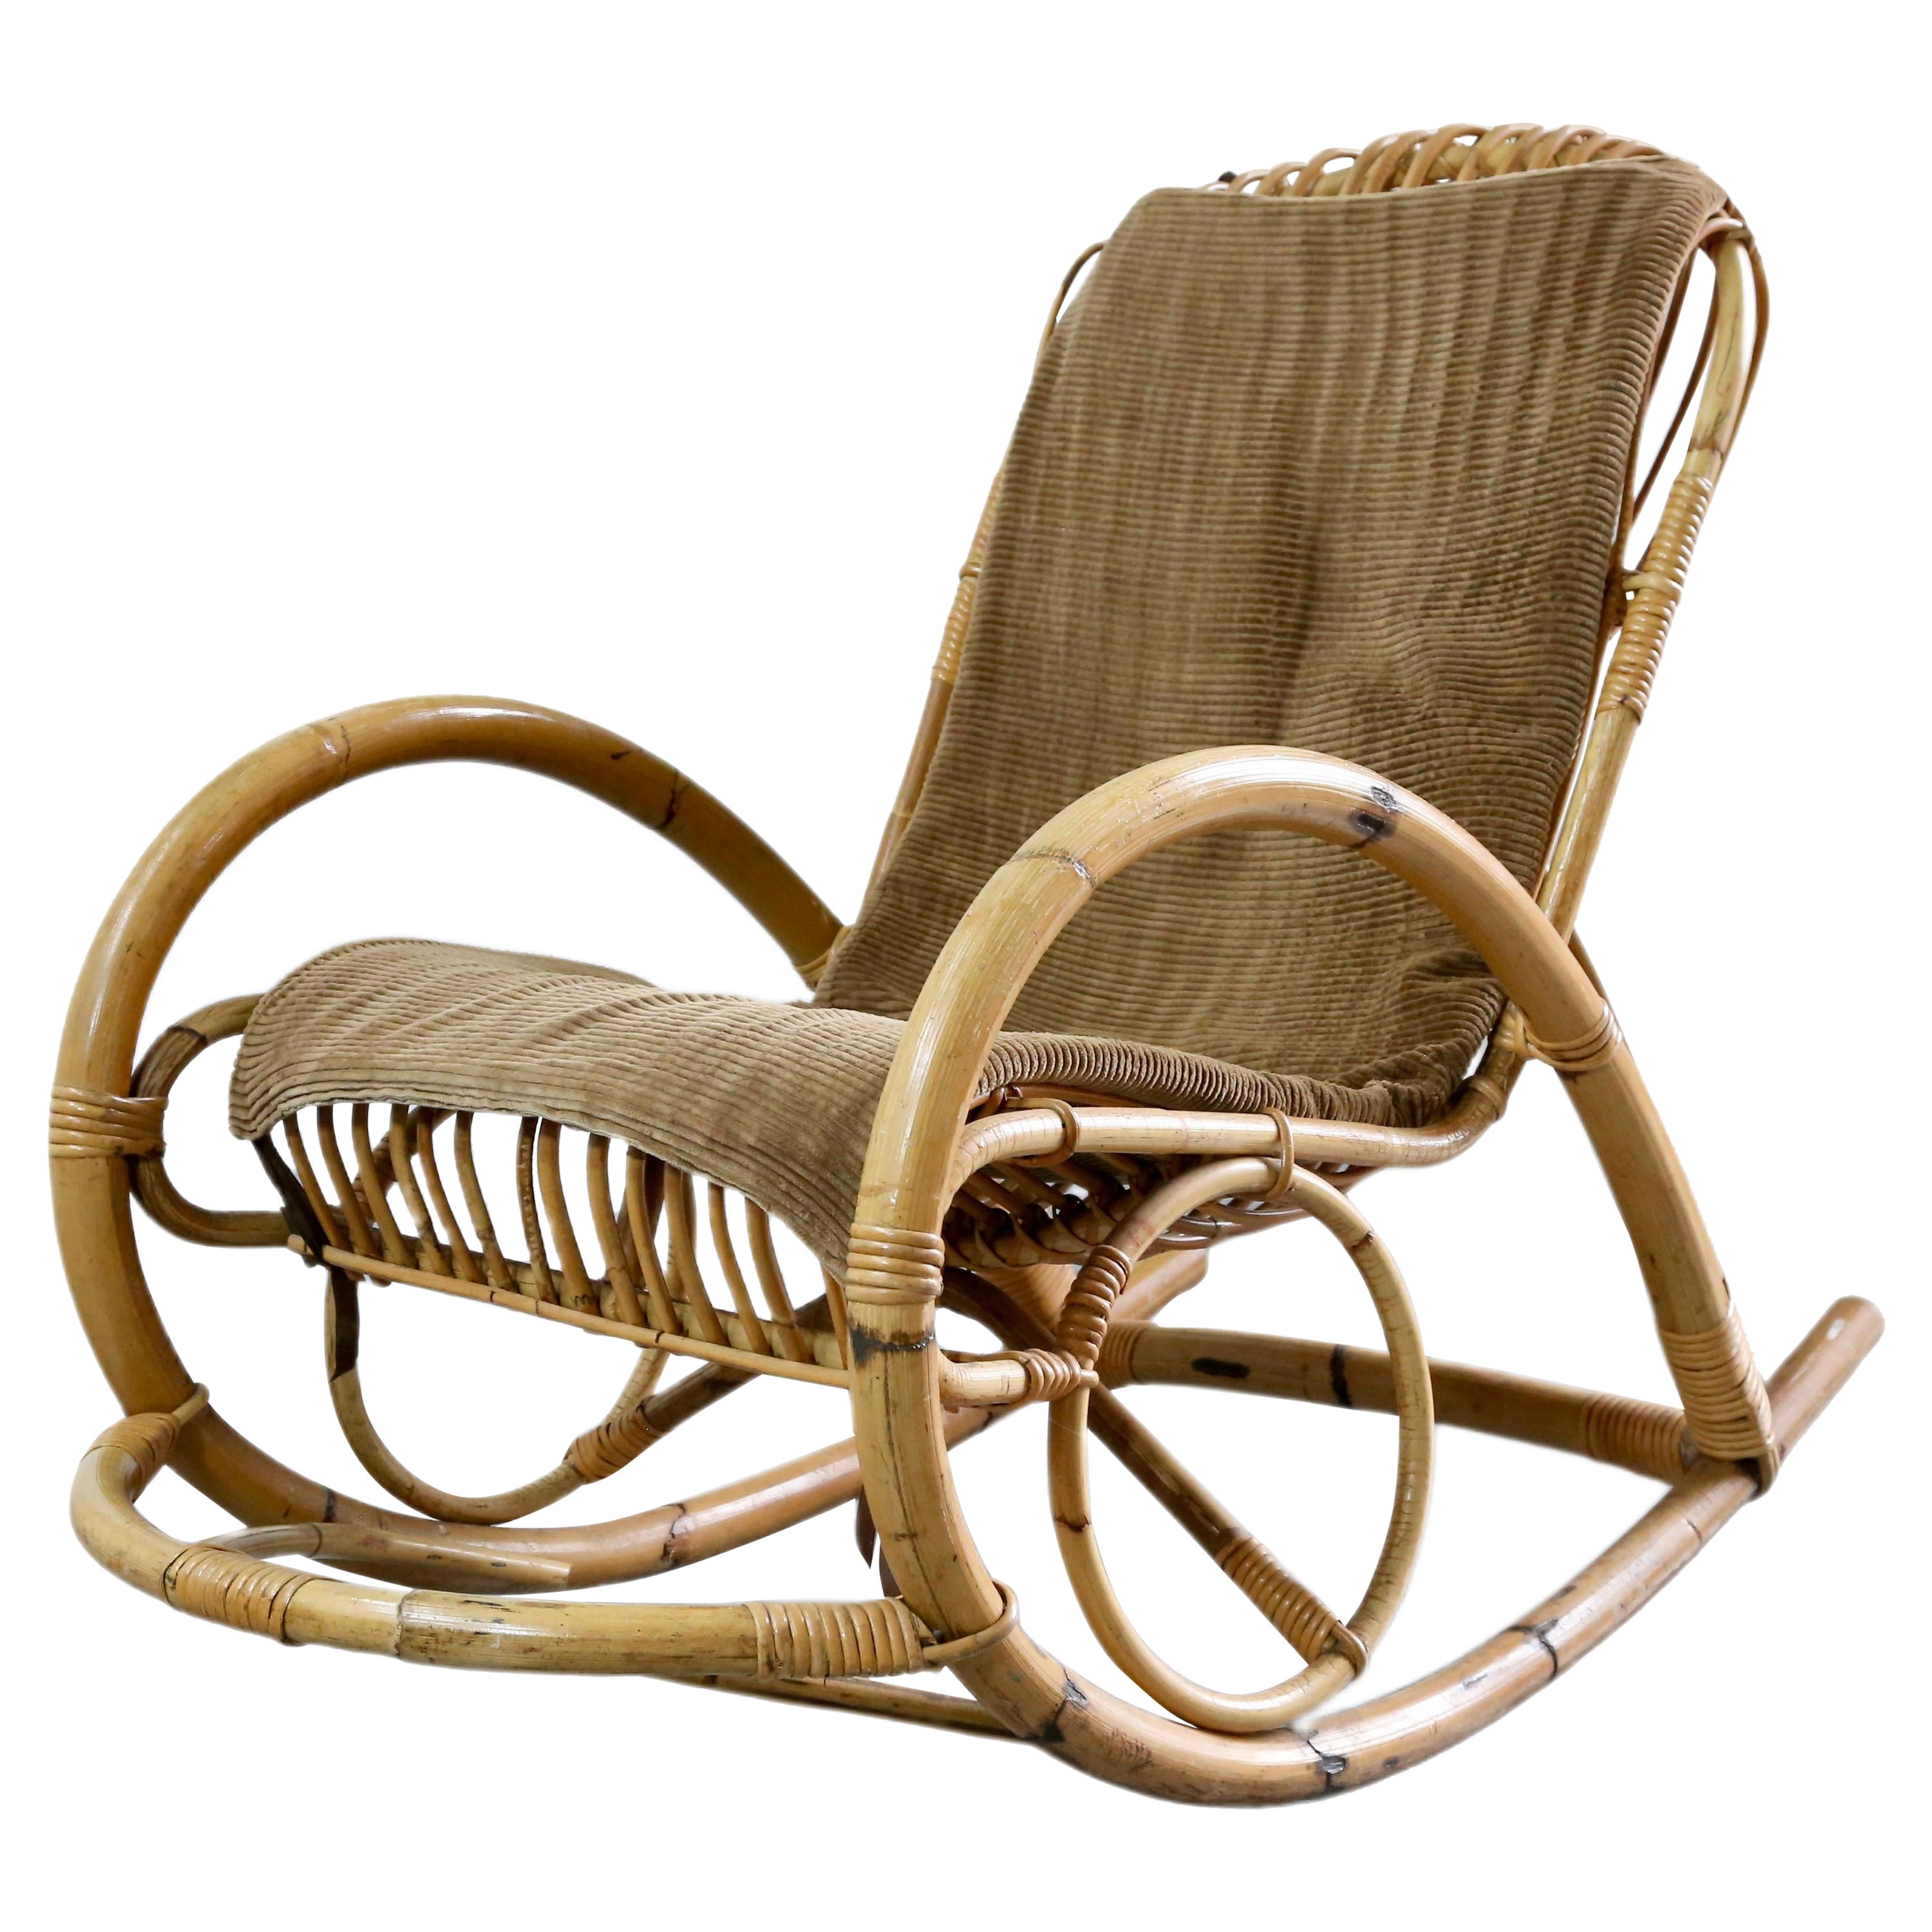 Boho Style Bamboo Wicker Rocking Chair By Dirk Van Sliedregt For Rohe Noordwolde